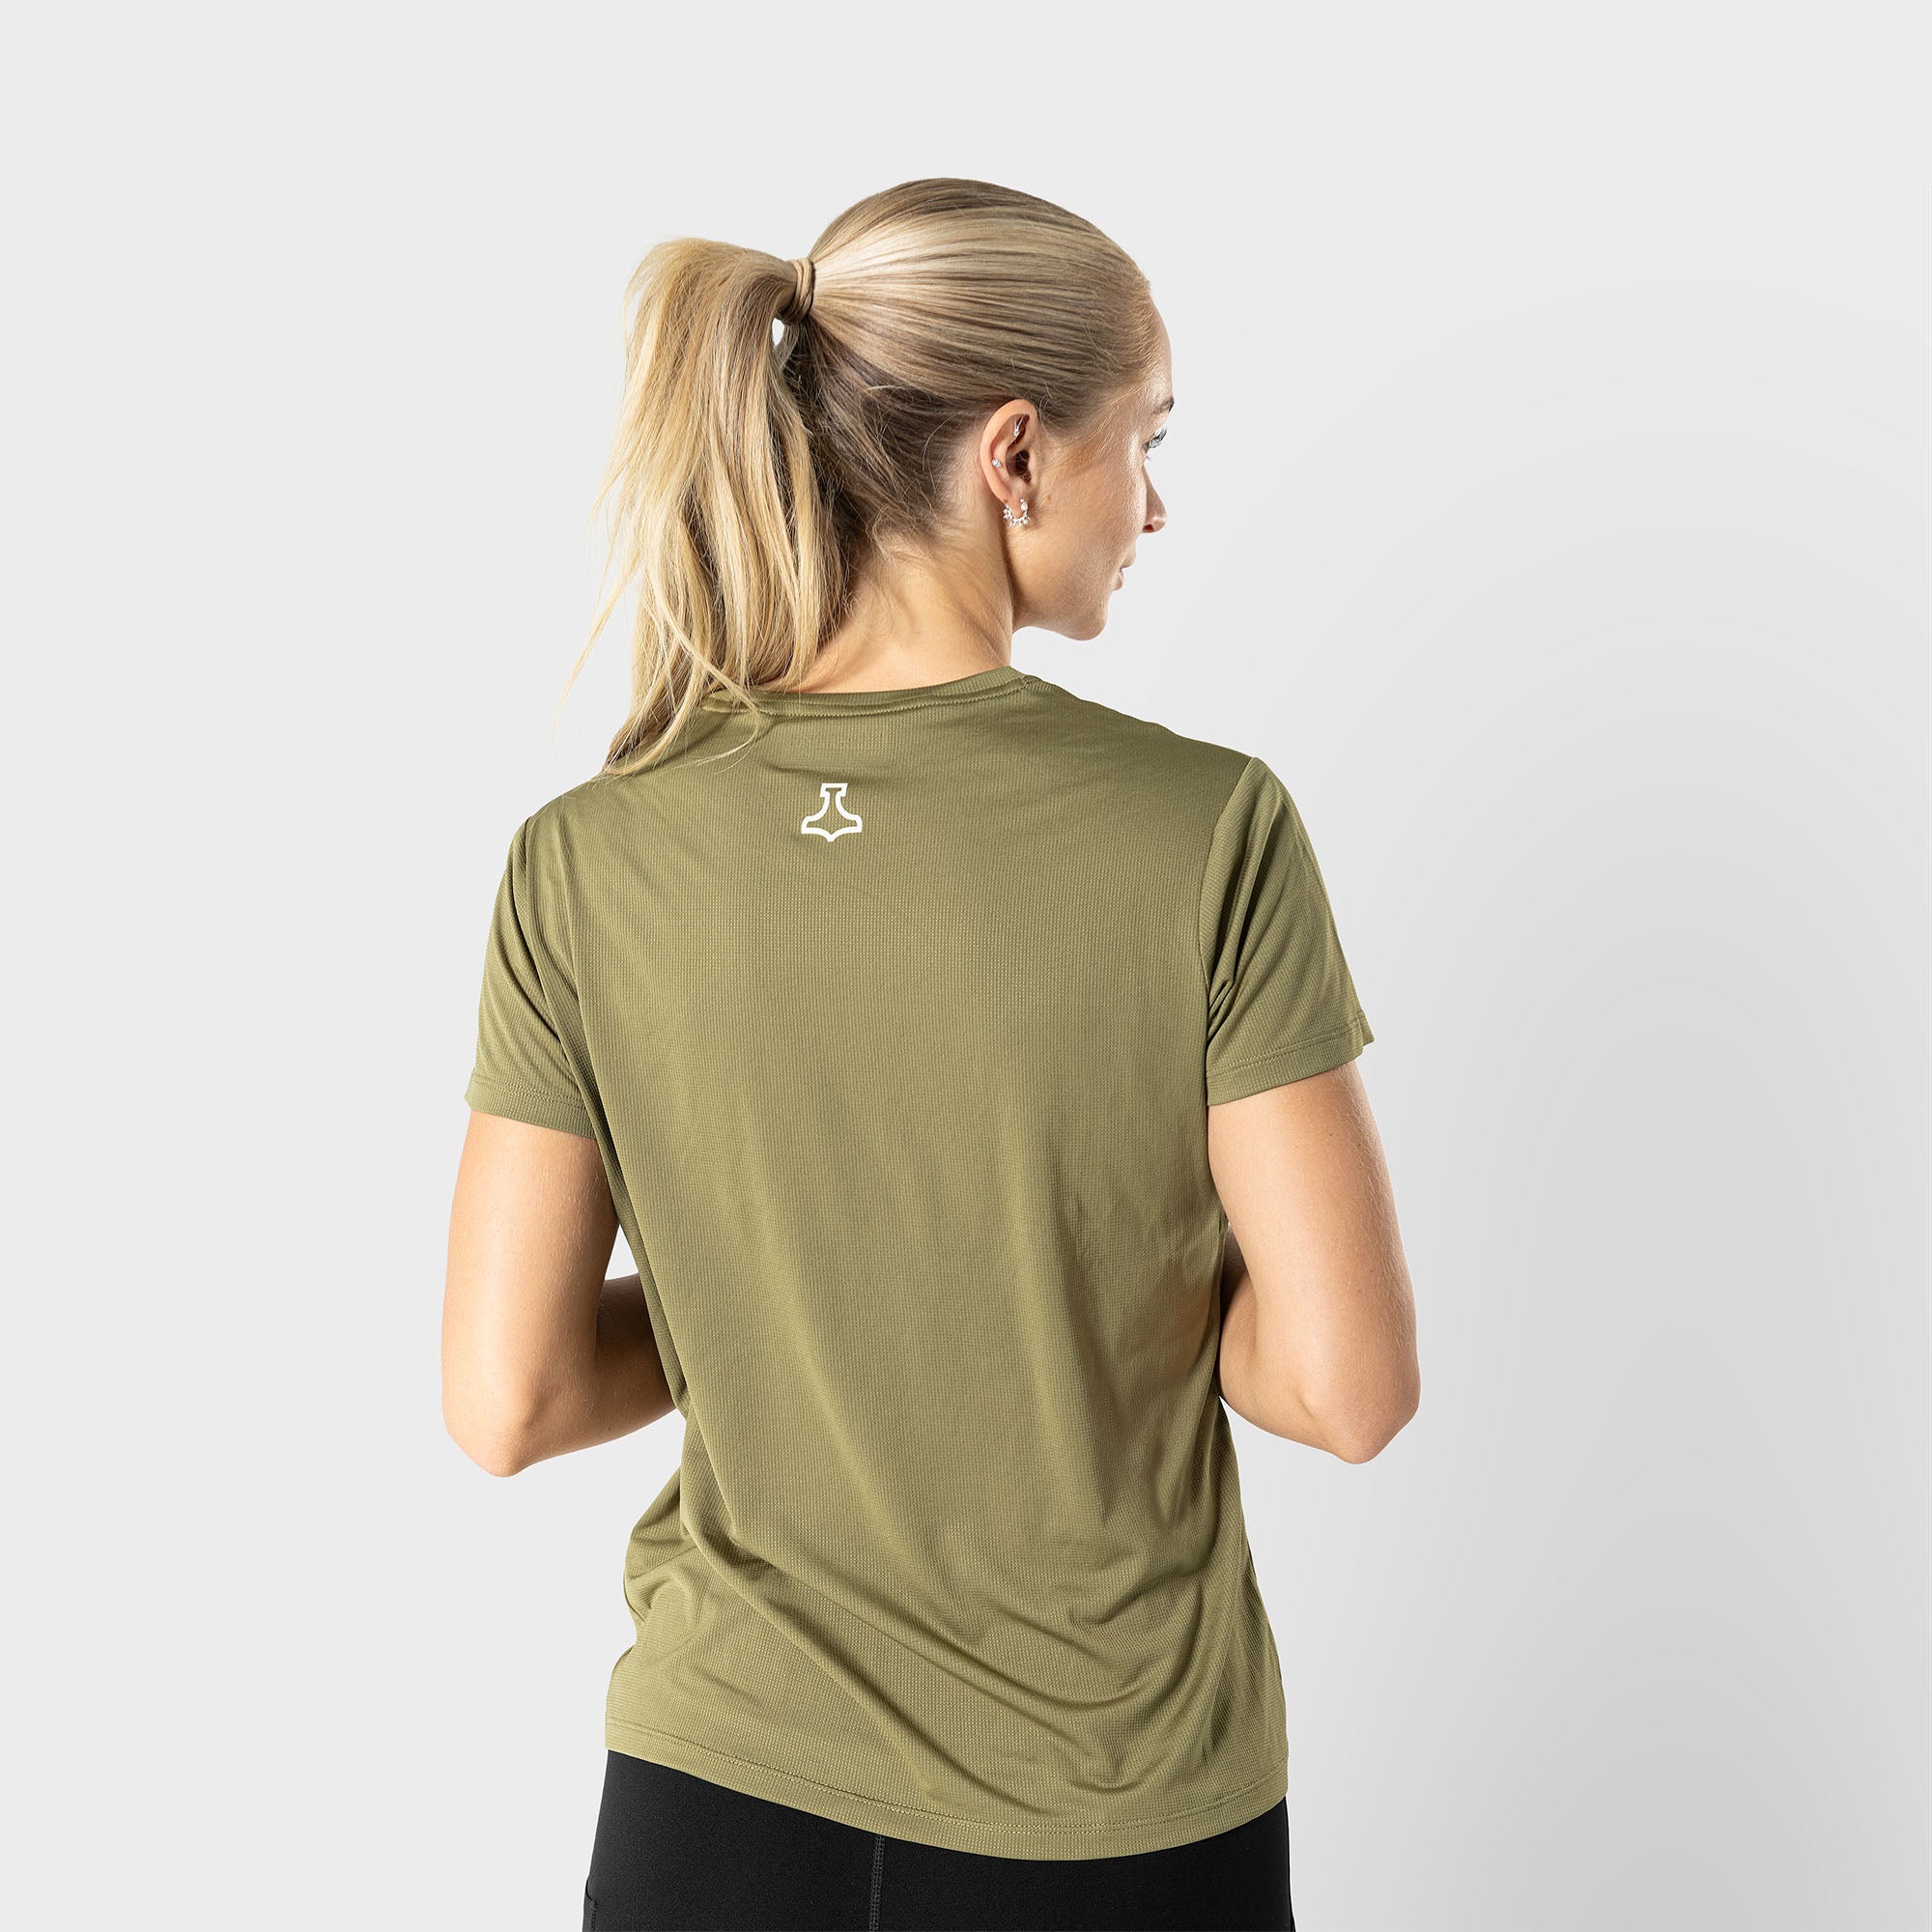 Liiteguard GROUND-TECH T-shirt (Women) T-shirts Dusty Green